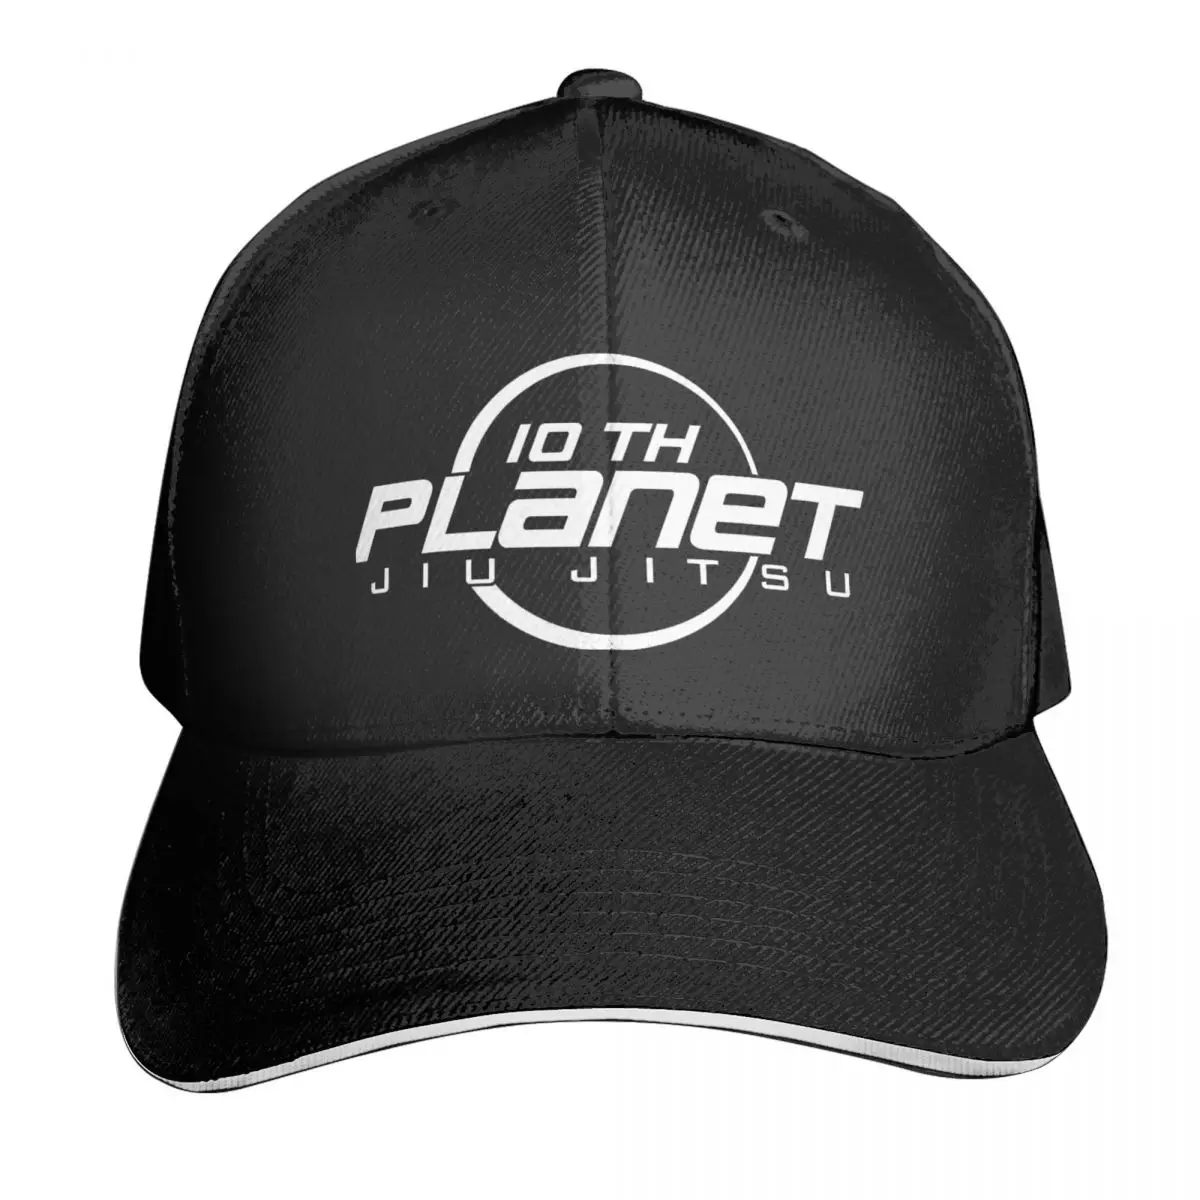 

10th Planet Jiu-Jitsu Casquette, Polyester Cap Fashionable Moisture Wicking Nice Gift